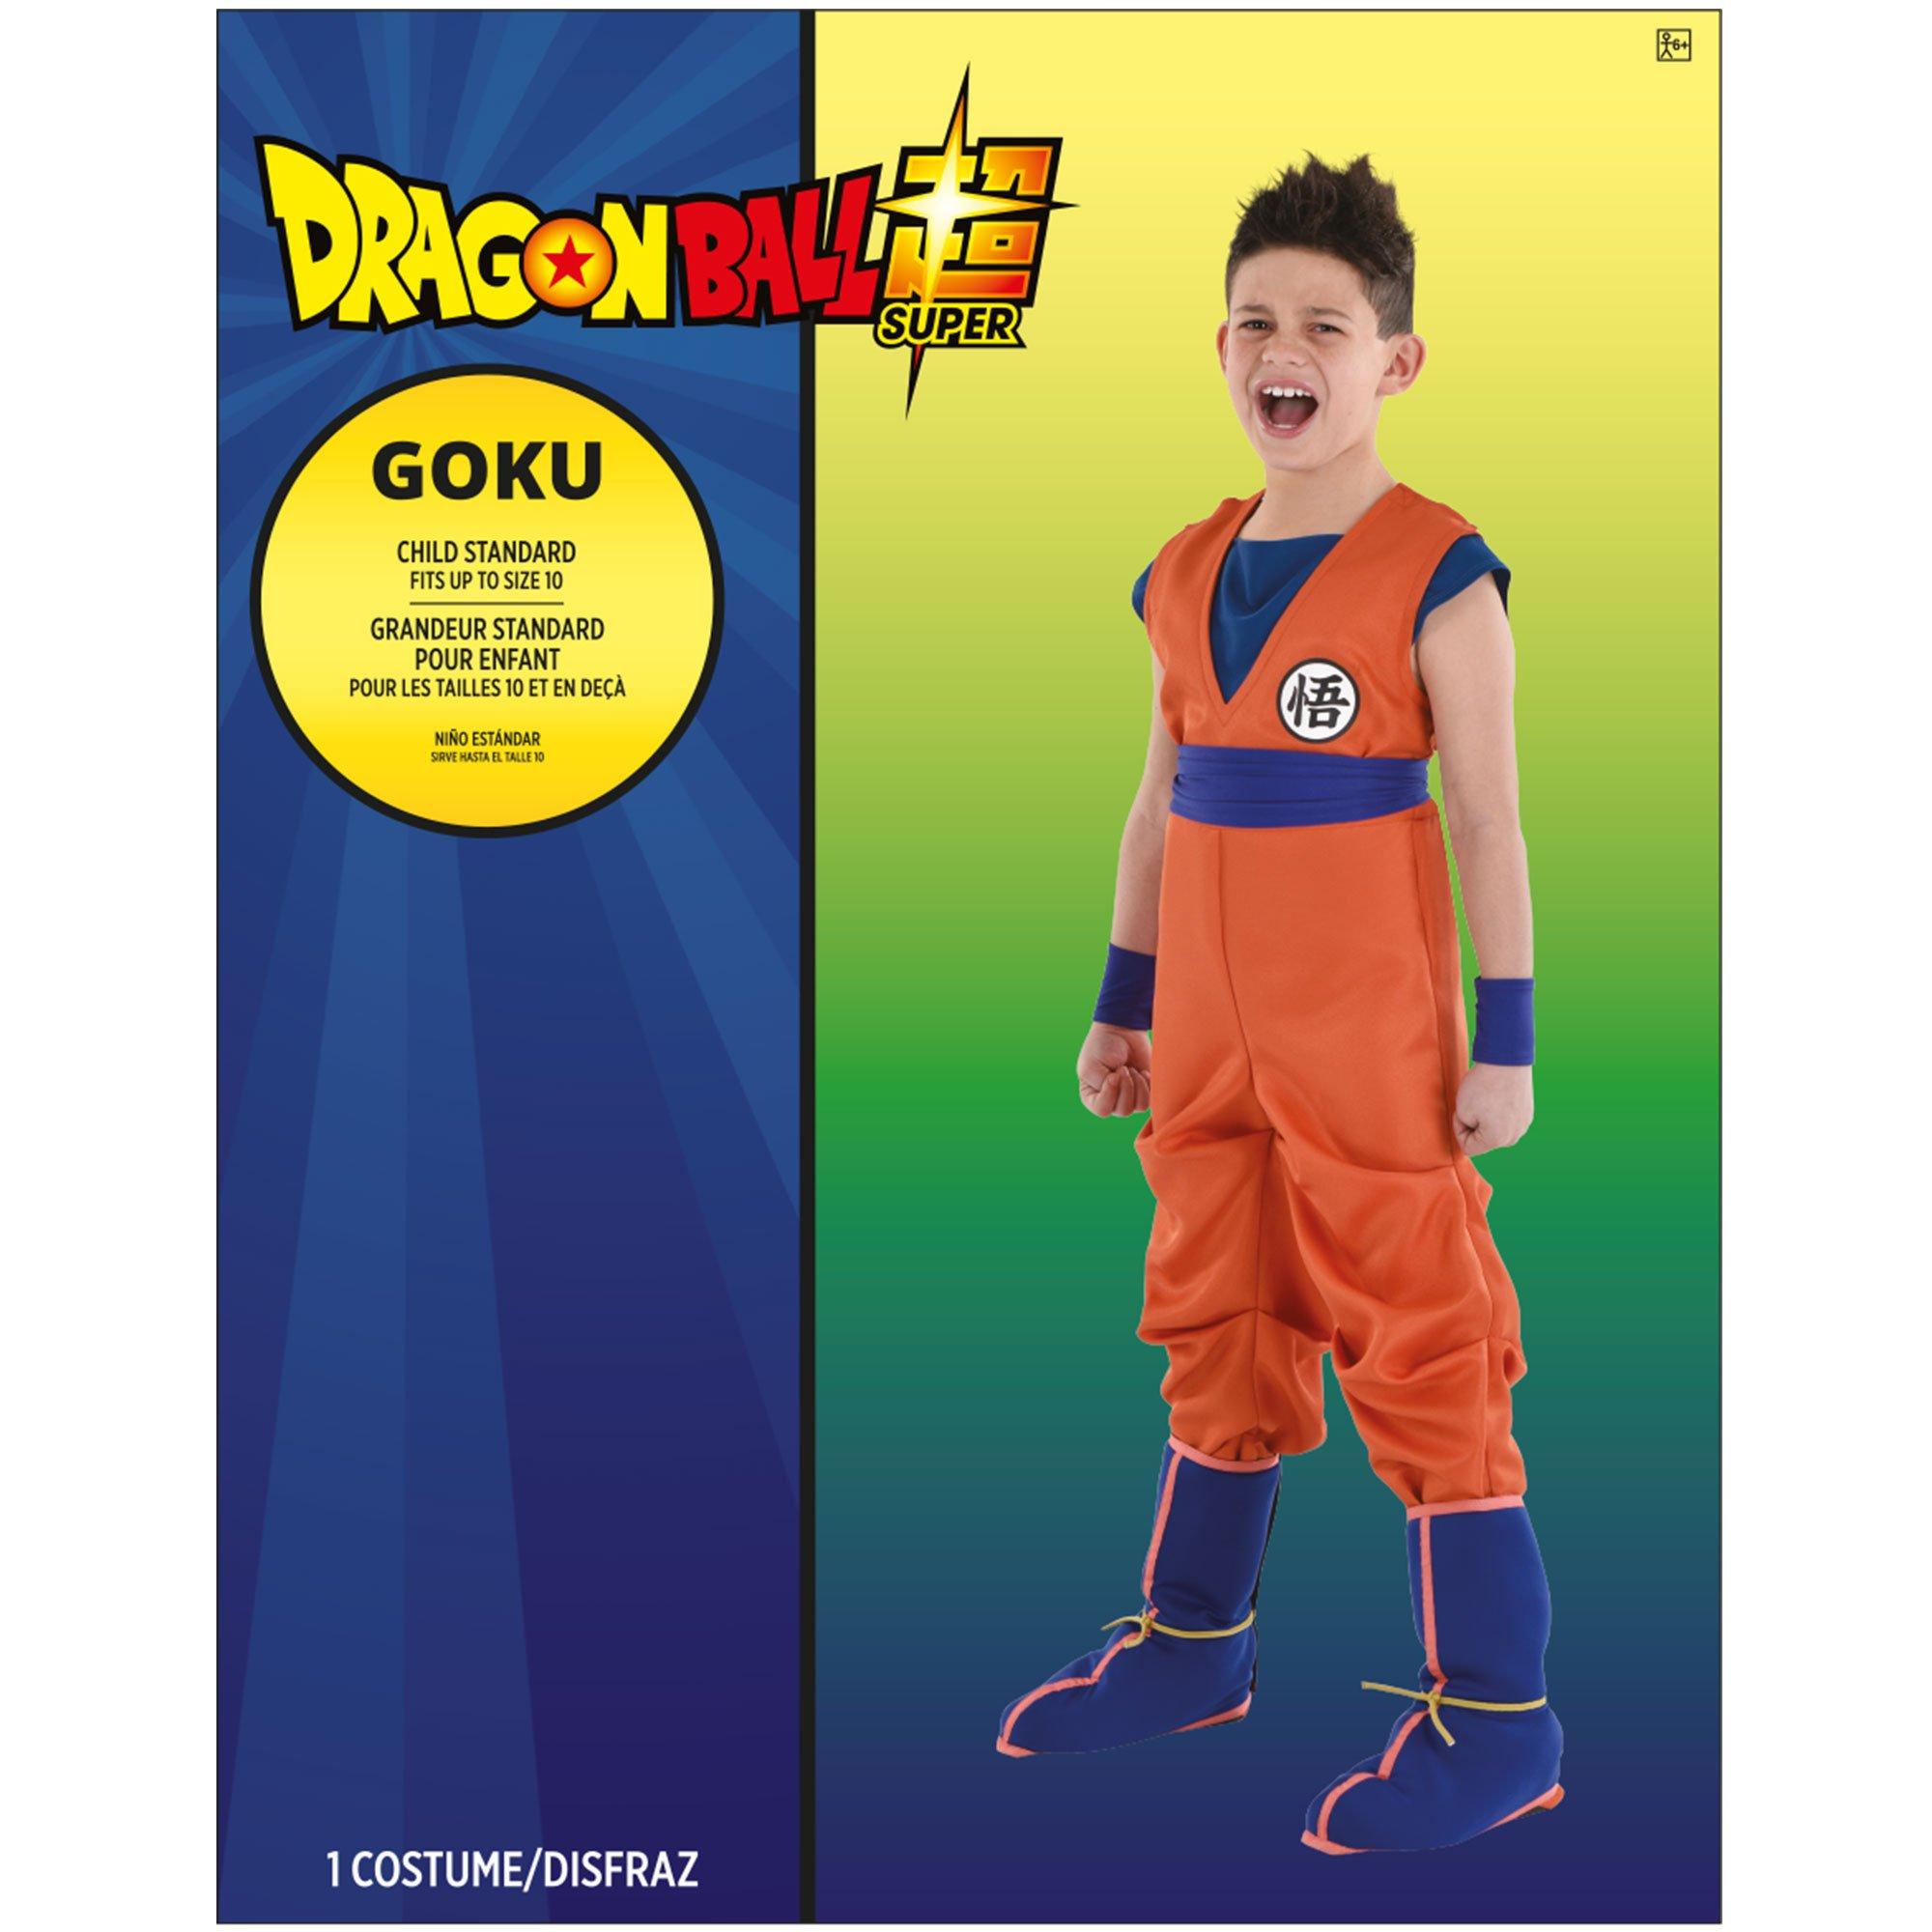 Dragon Ball Z Goku Costume for Boy's, Kid's Anime Goku Halloween Costume,  Dragon Ball Z Outfit